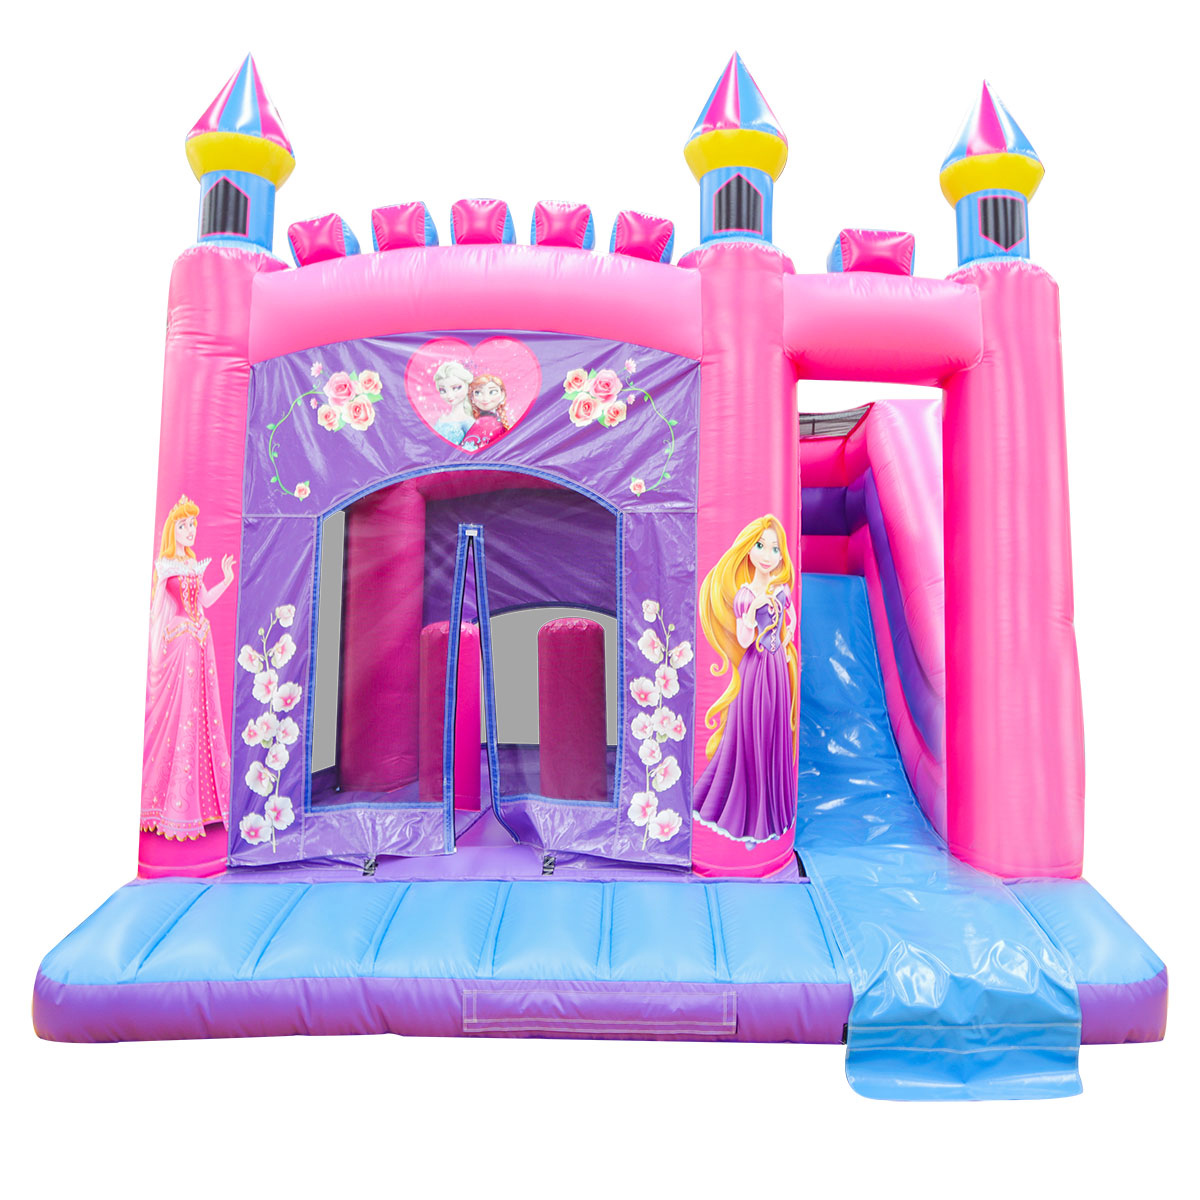 Inflatable princess castle slideYG-124